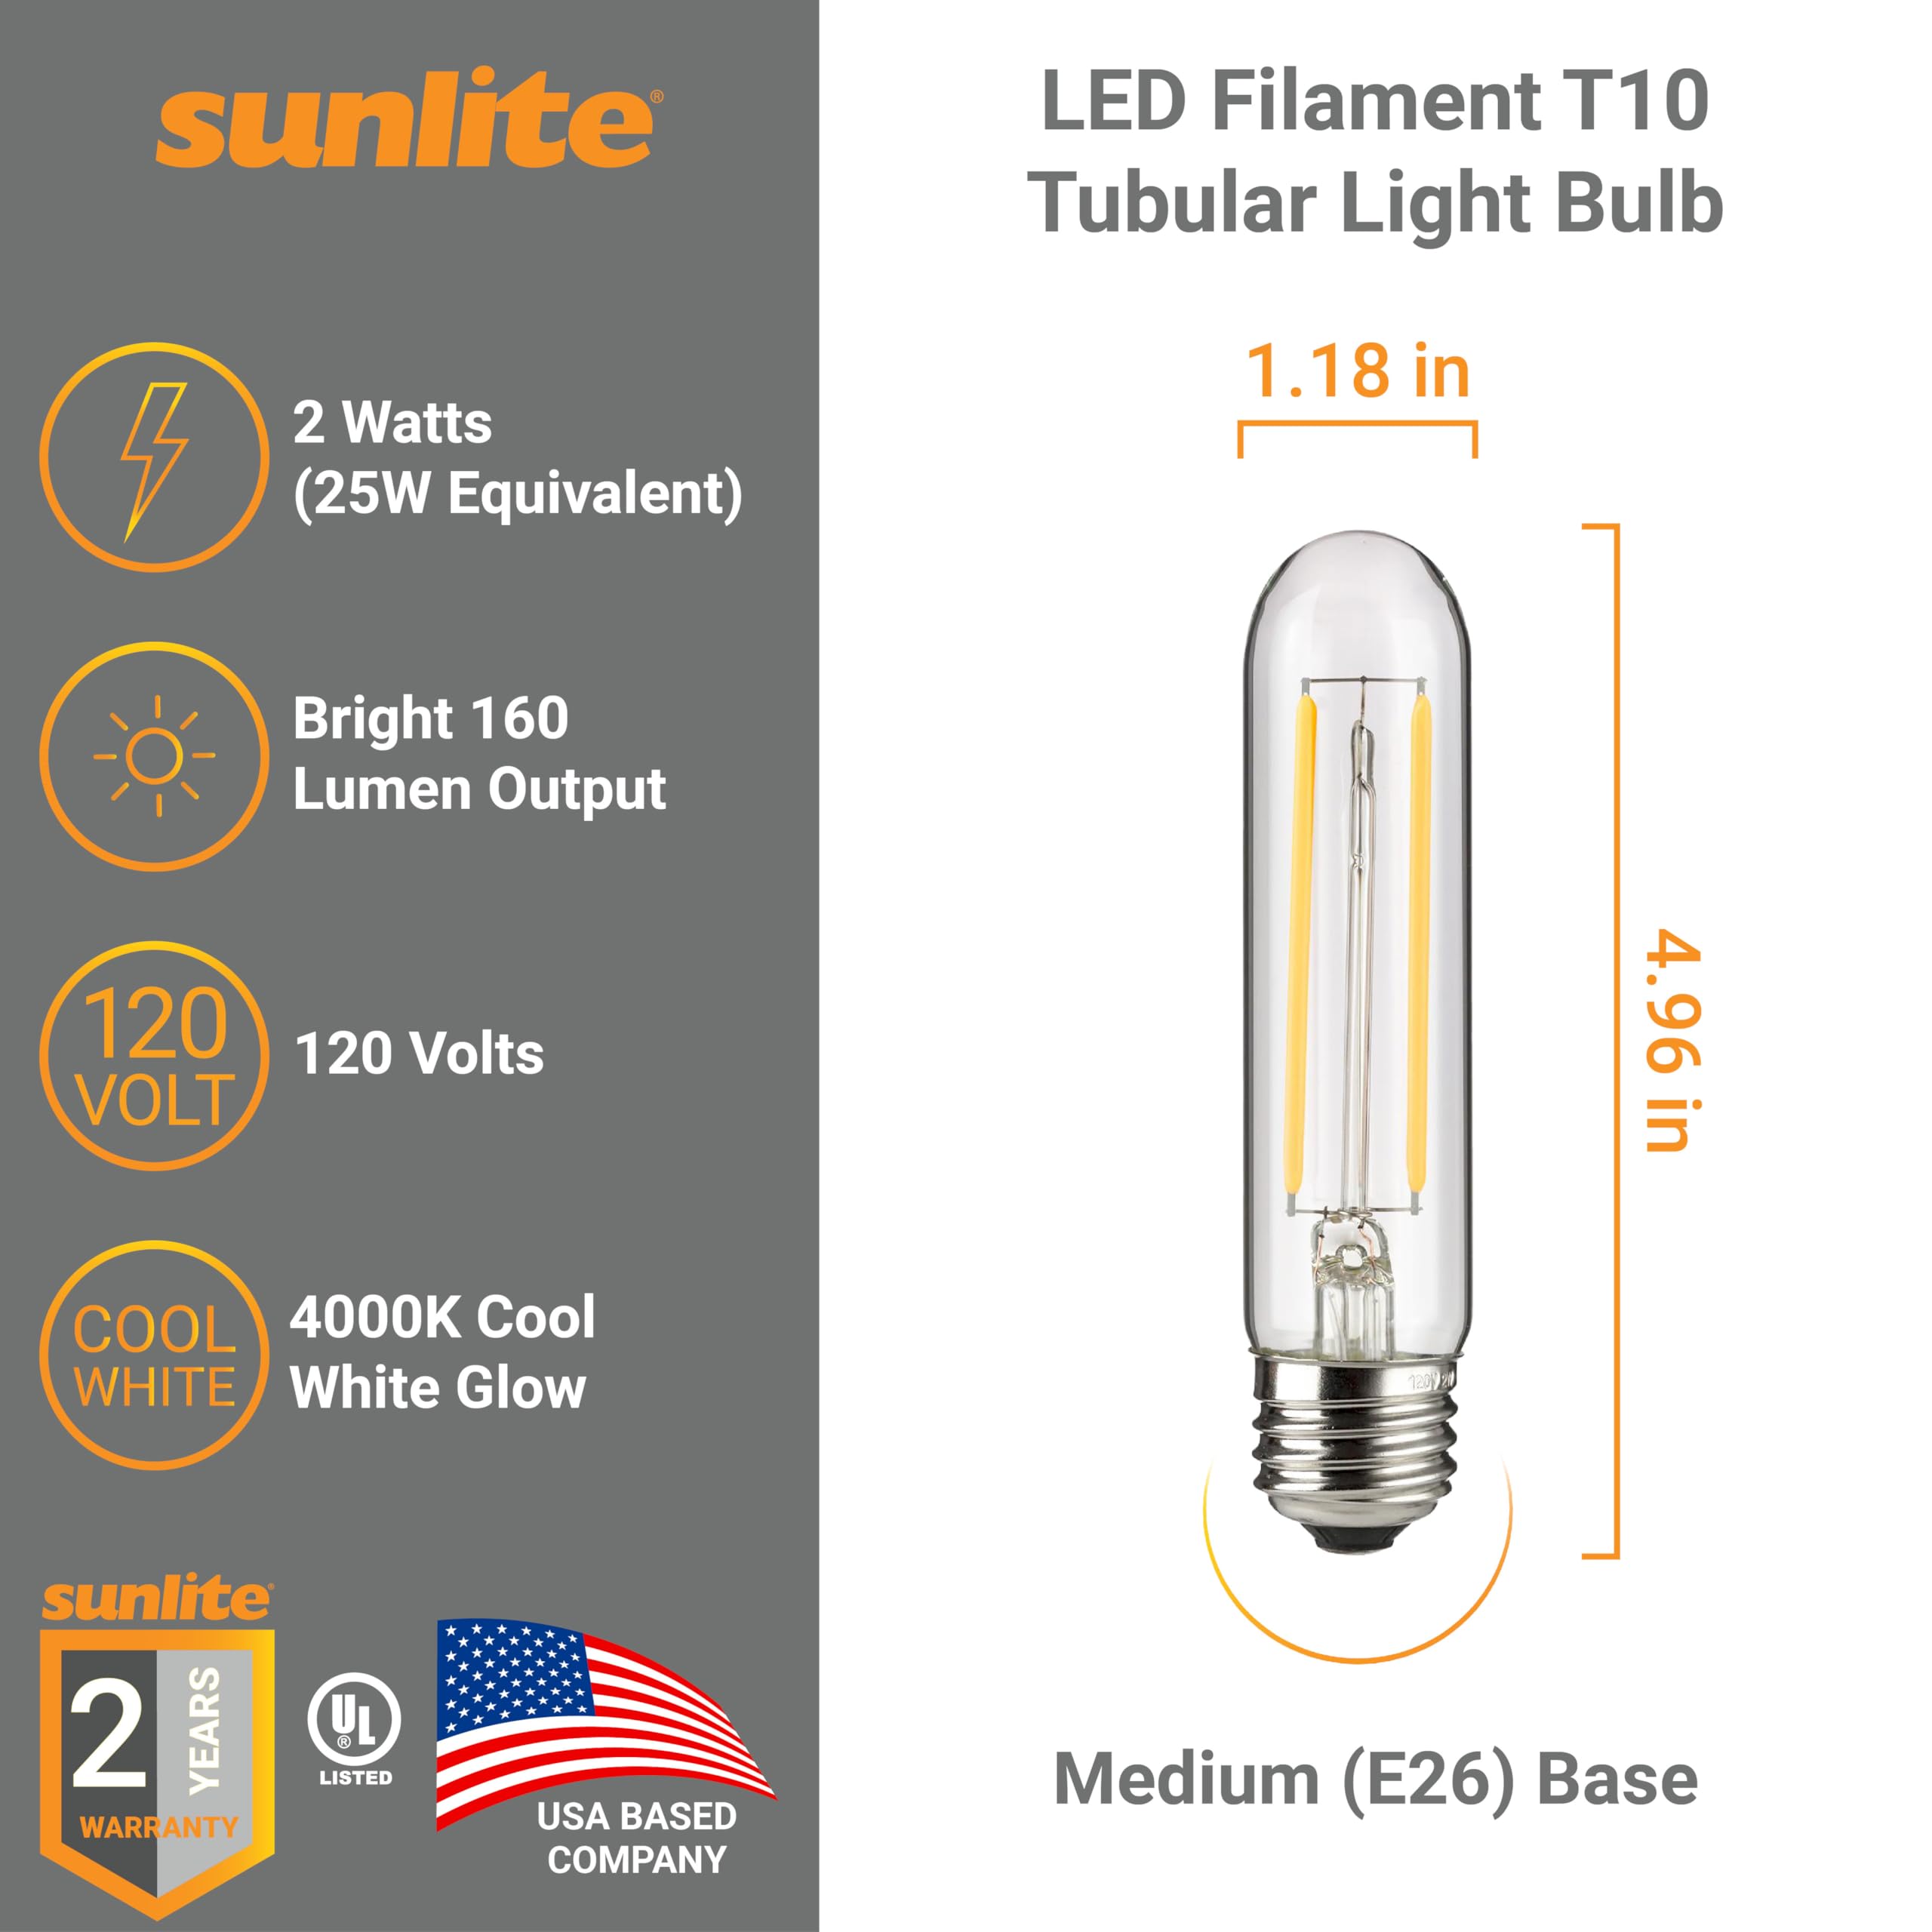 Sunlite LED Filament T10 Tubular Light Bulb, 2 Watts (25W Equivalent), 160 Lumens, Medium E26 Base, 120 Volts, Dimmable, 90 CRI, UL Listed, Clear, 4000K Cool White, 1 Pack